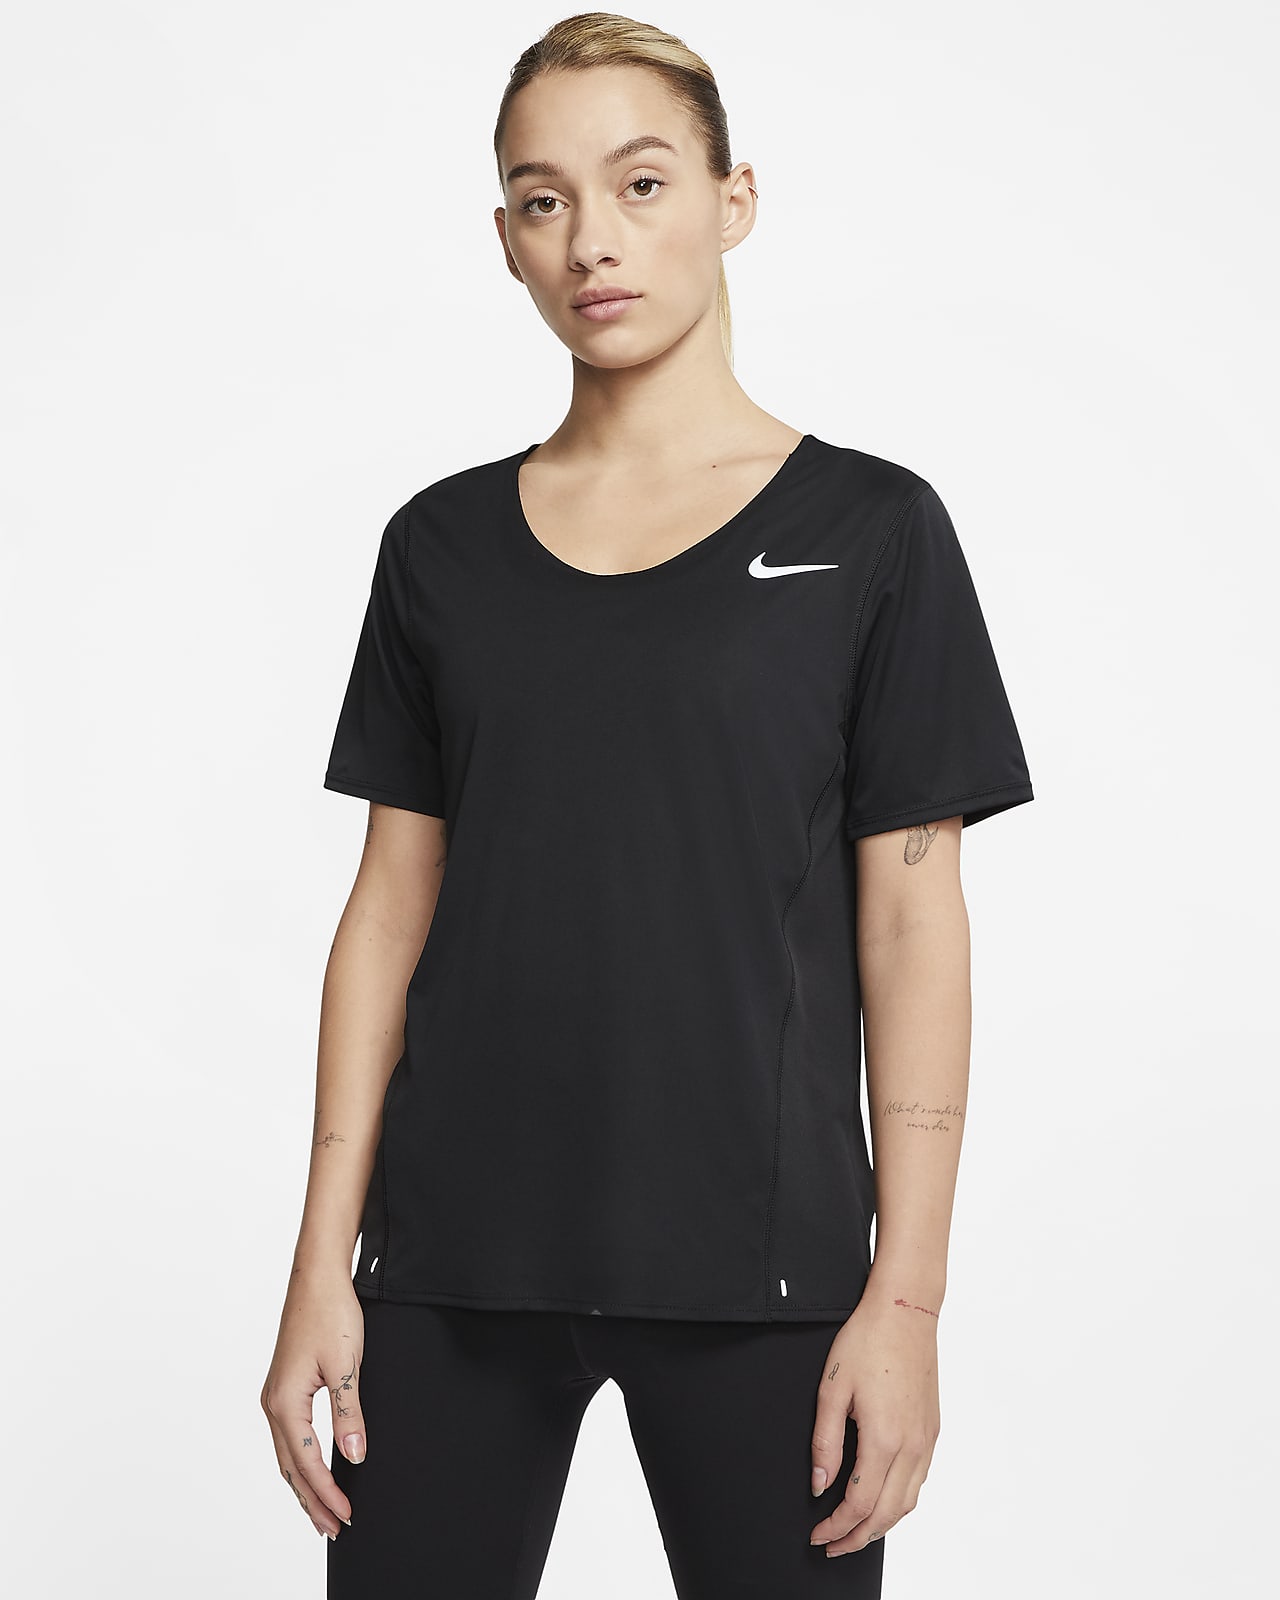 Camisola de corrida Nike City Sleek Mulher - CJ9444-100 - Branco